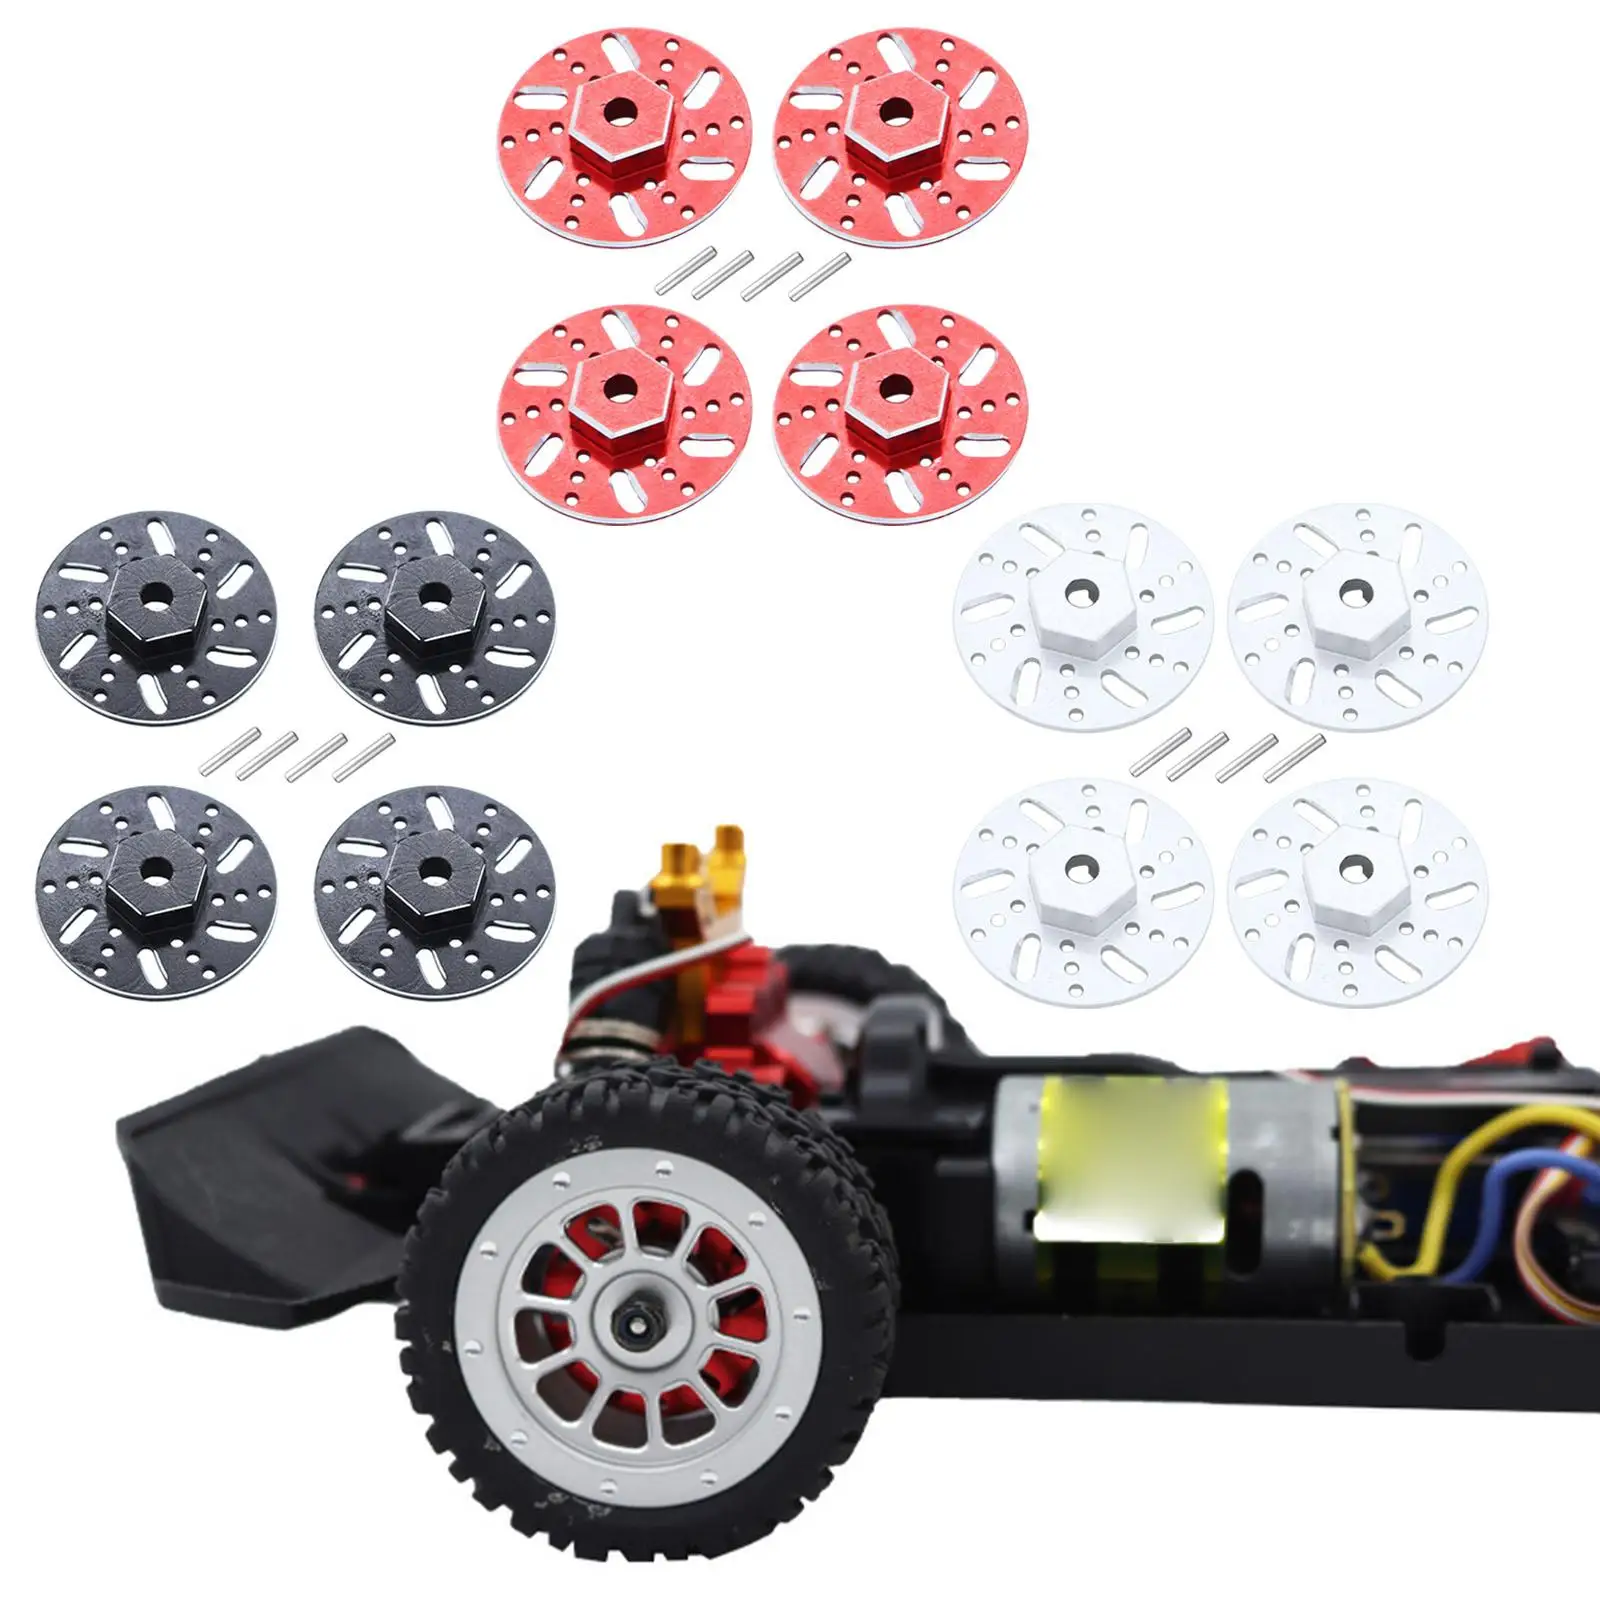 Aluminum Alloy RC Brake Disc for UD1602 1:16 Hobby Car Model Buggy Crawler DIY Accs